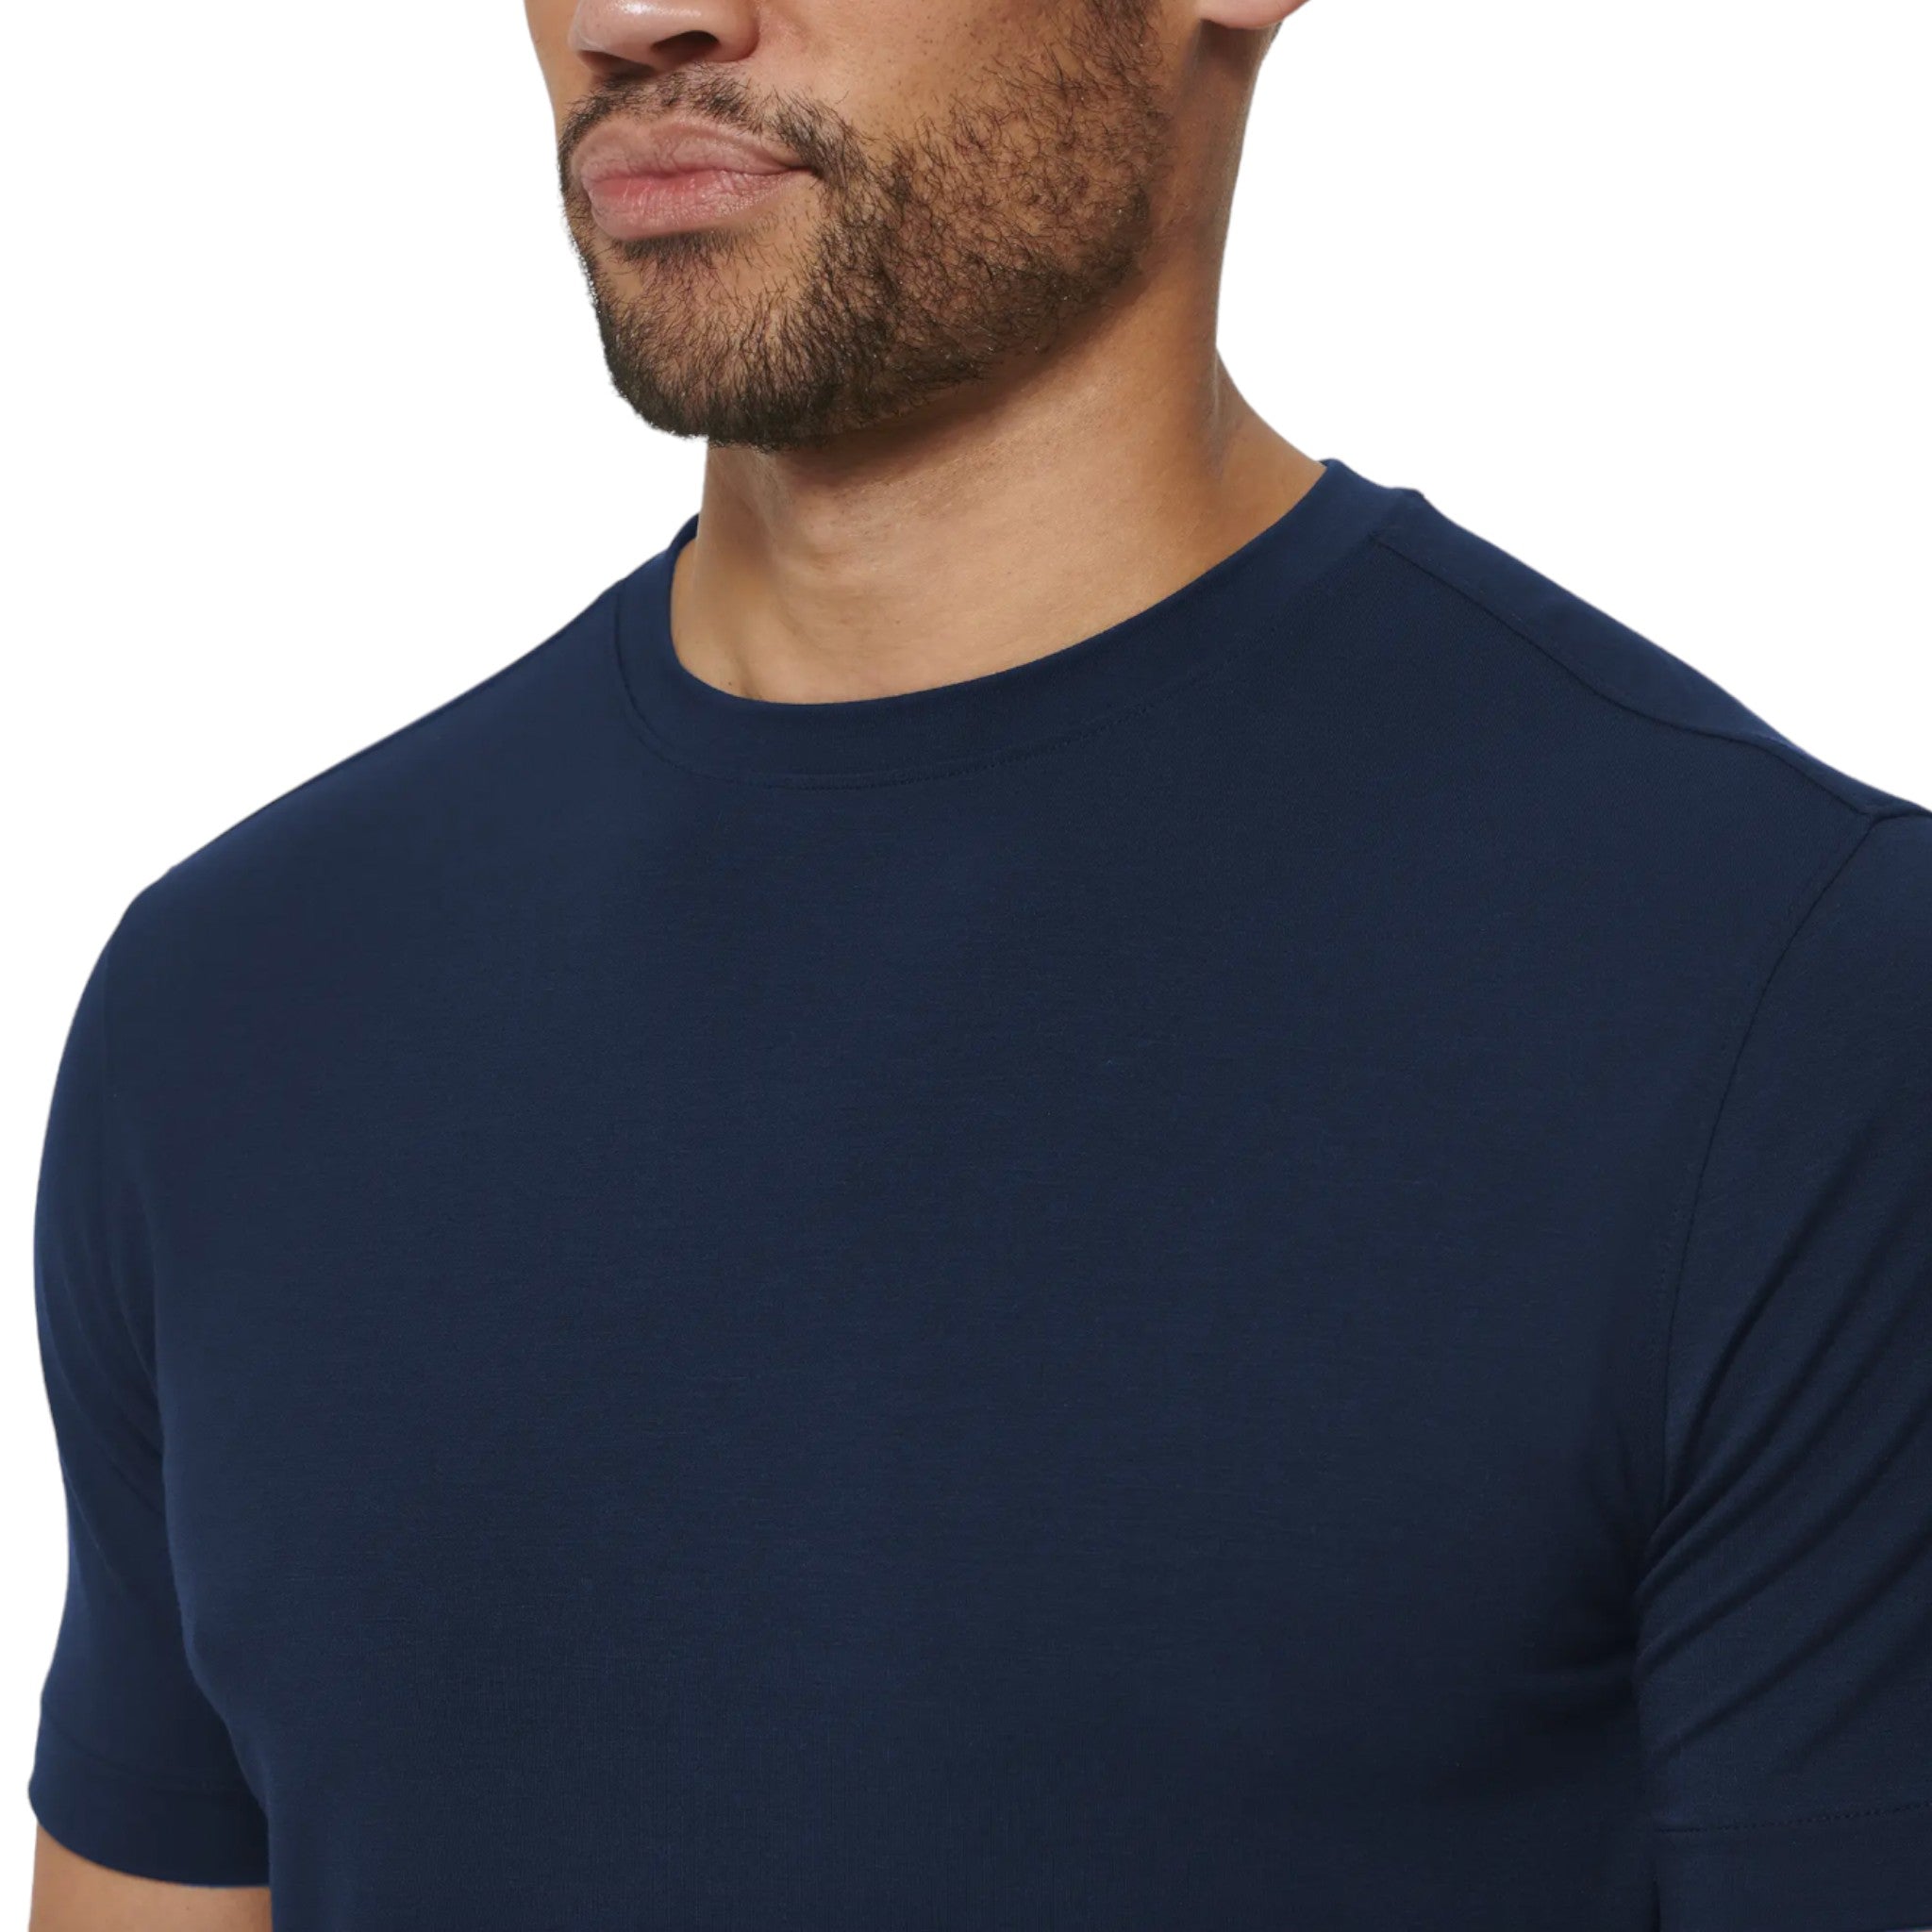 Mizzen & Main - Knox Short Sleeve T-Shirt - Navy Solid